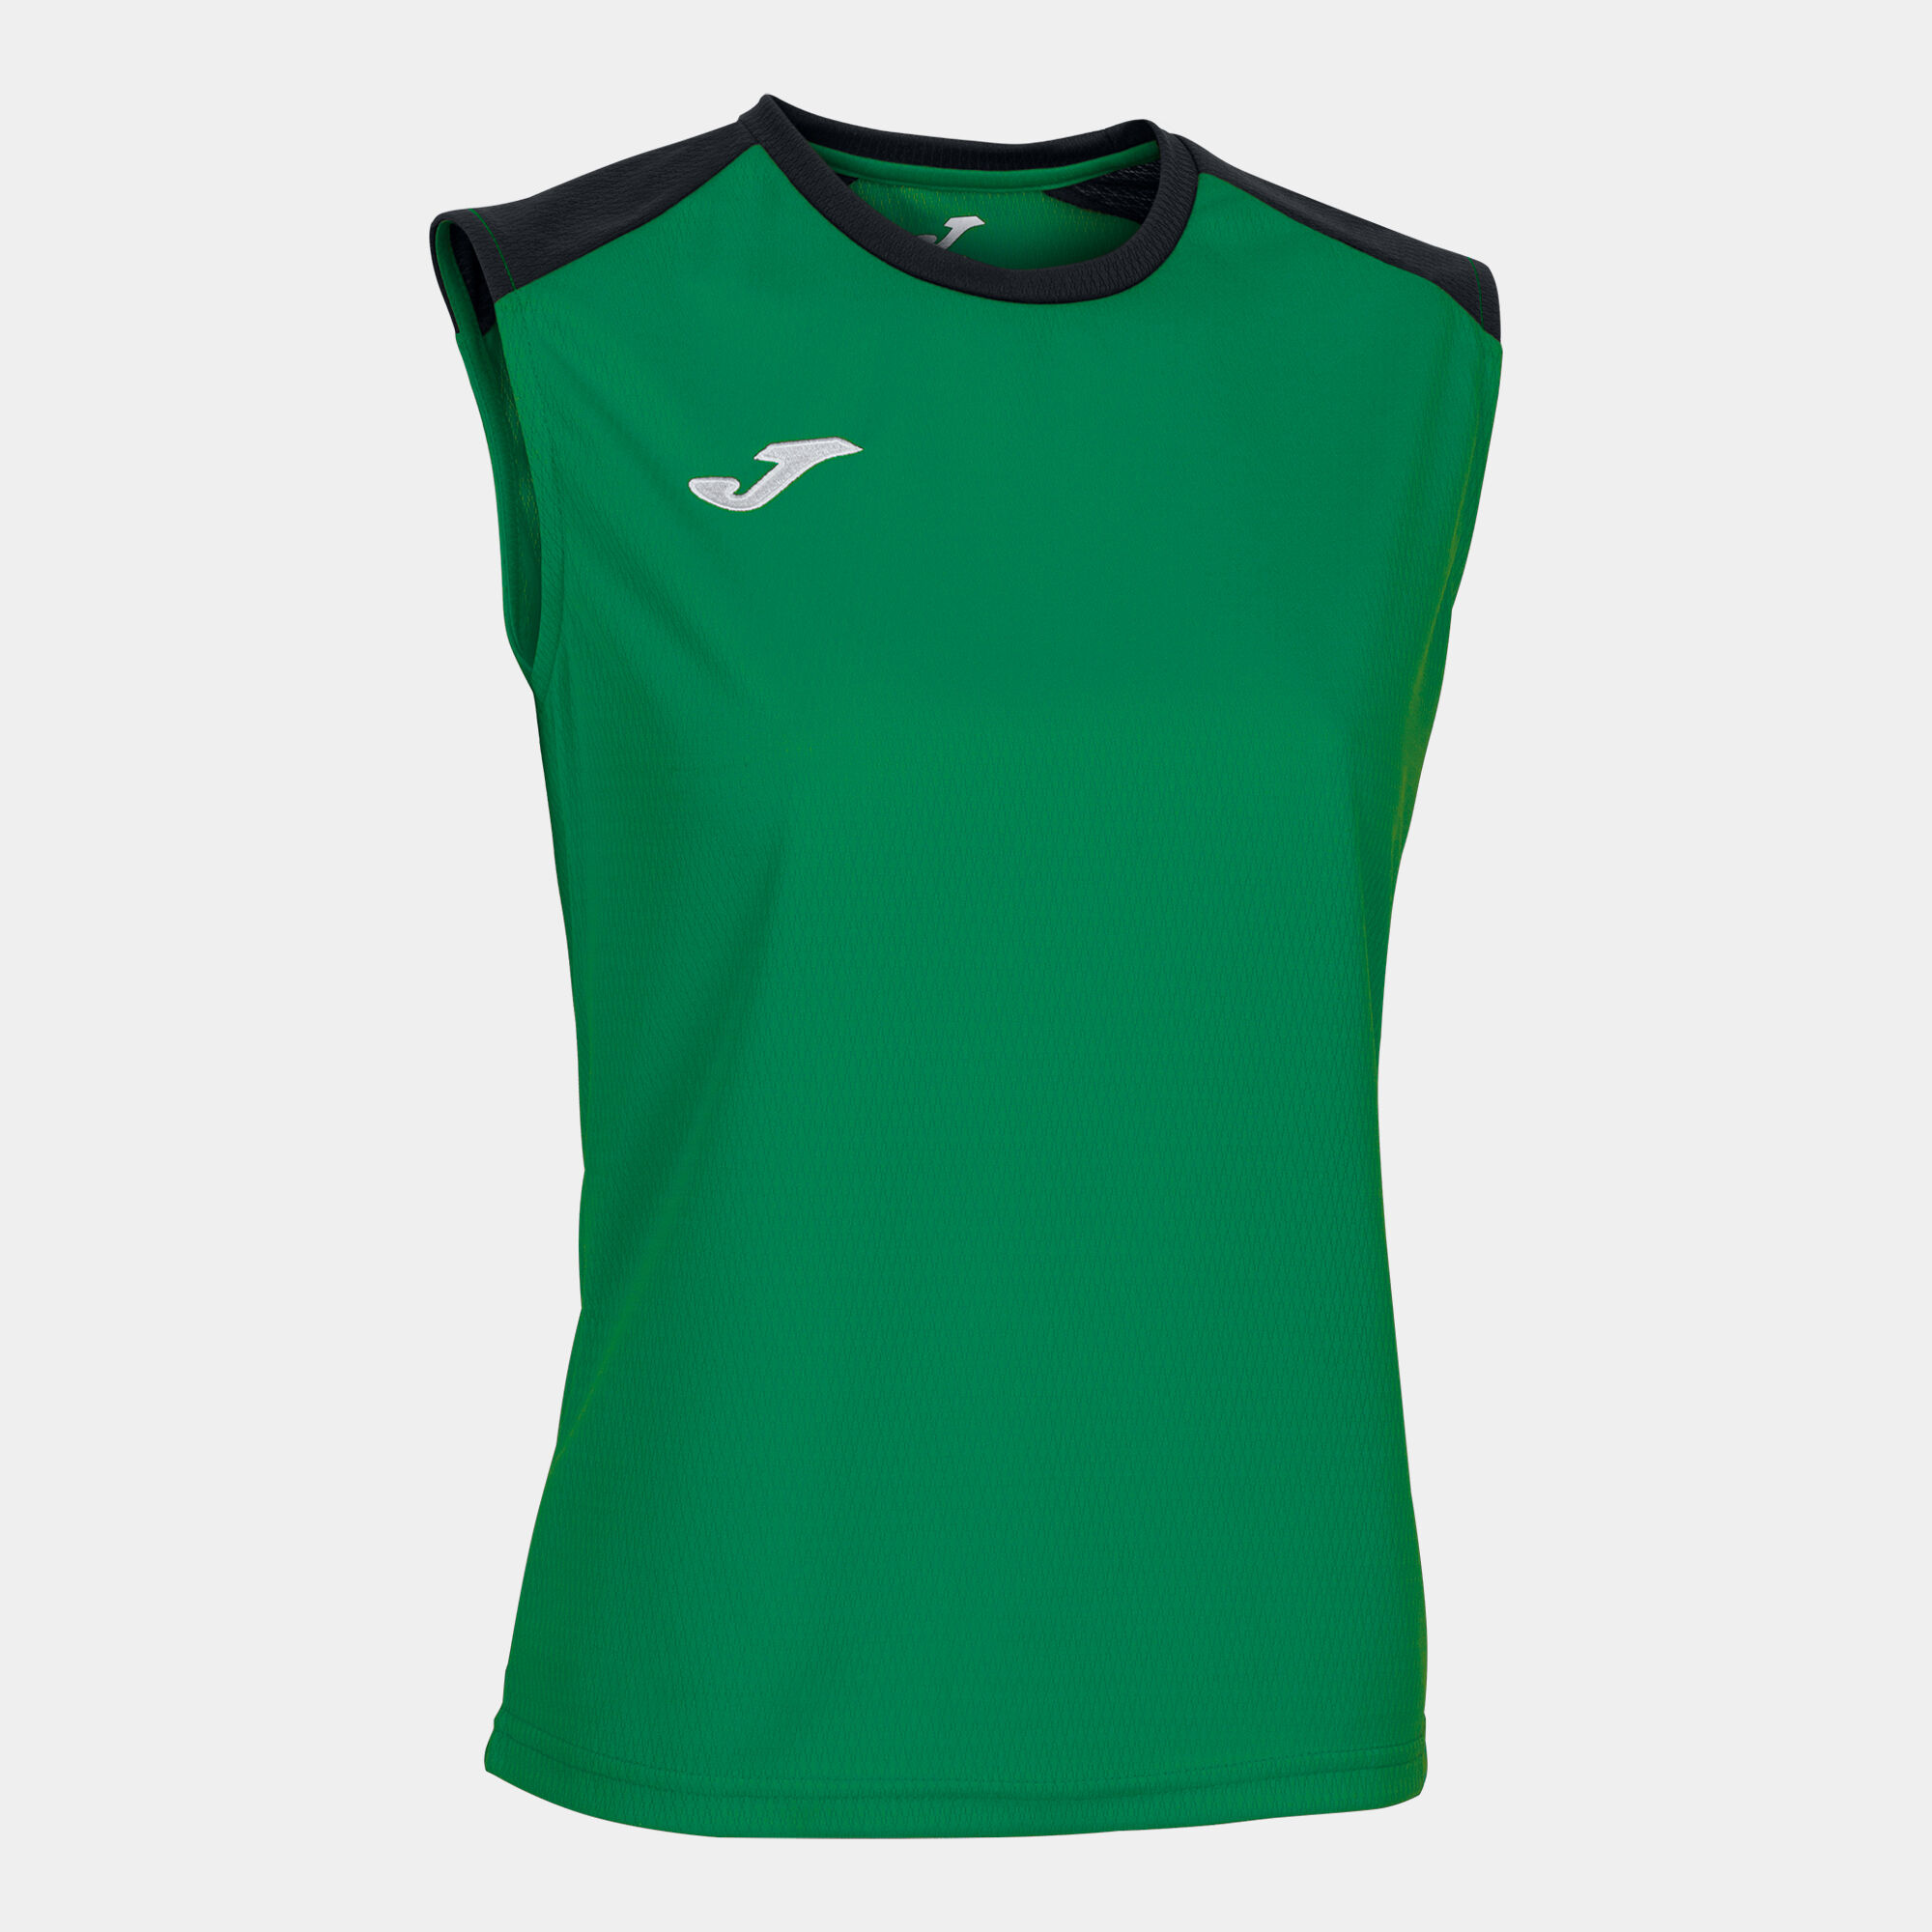 Camiseta tirantes mujer Eco Championship verde negro